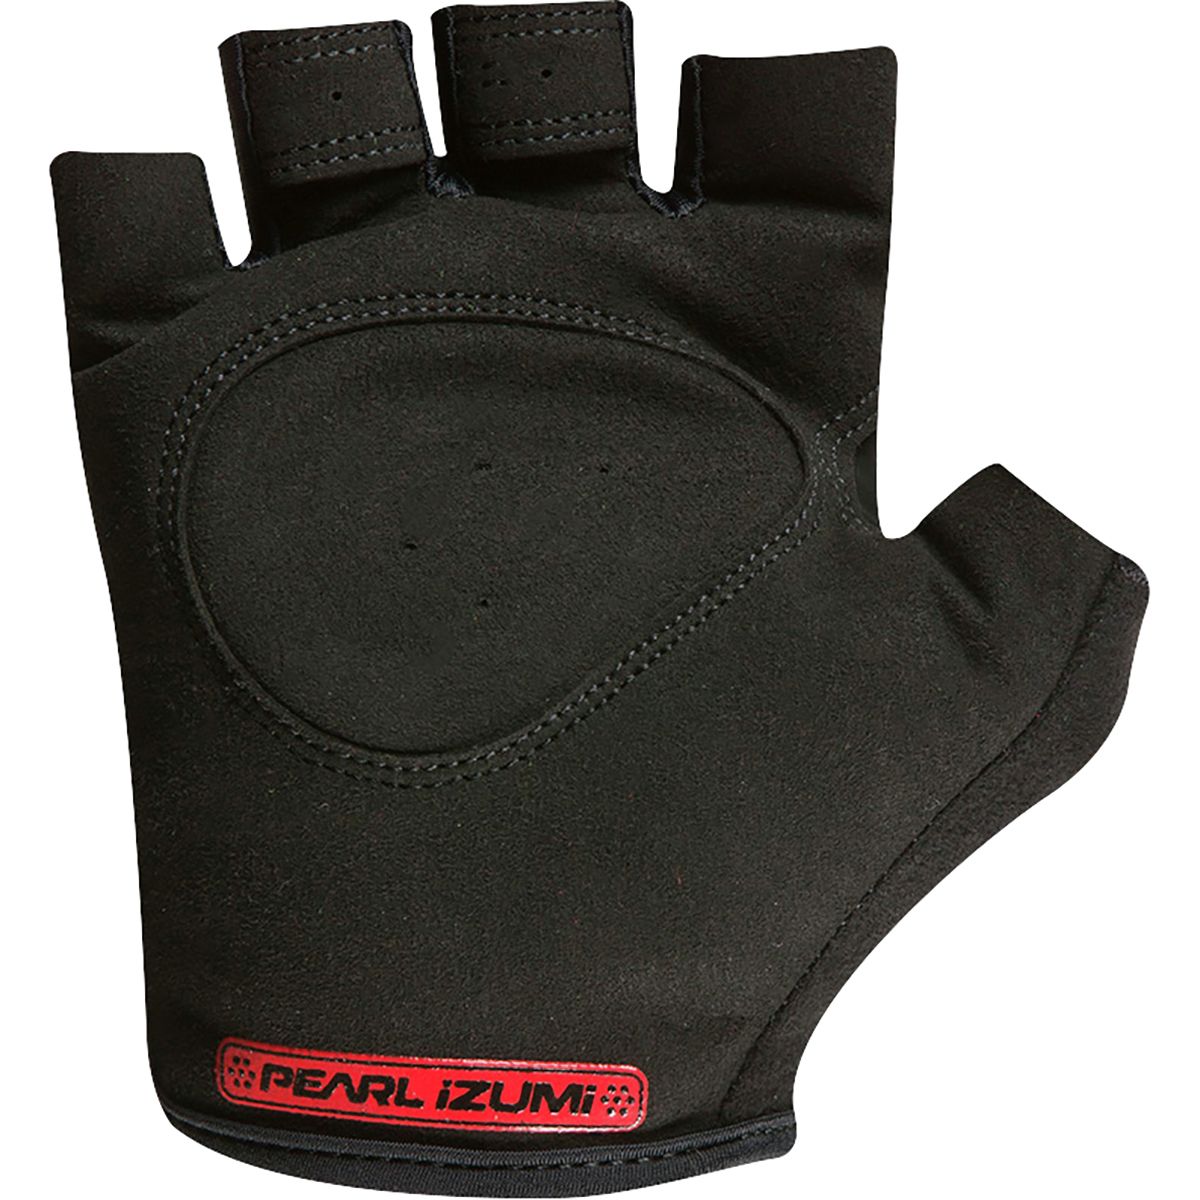 PEARL iZUMi Attack Glove - Men's - Men